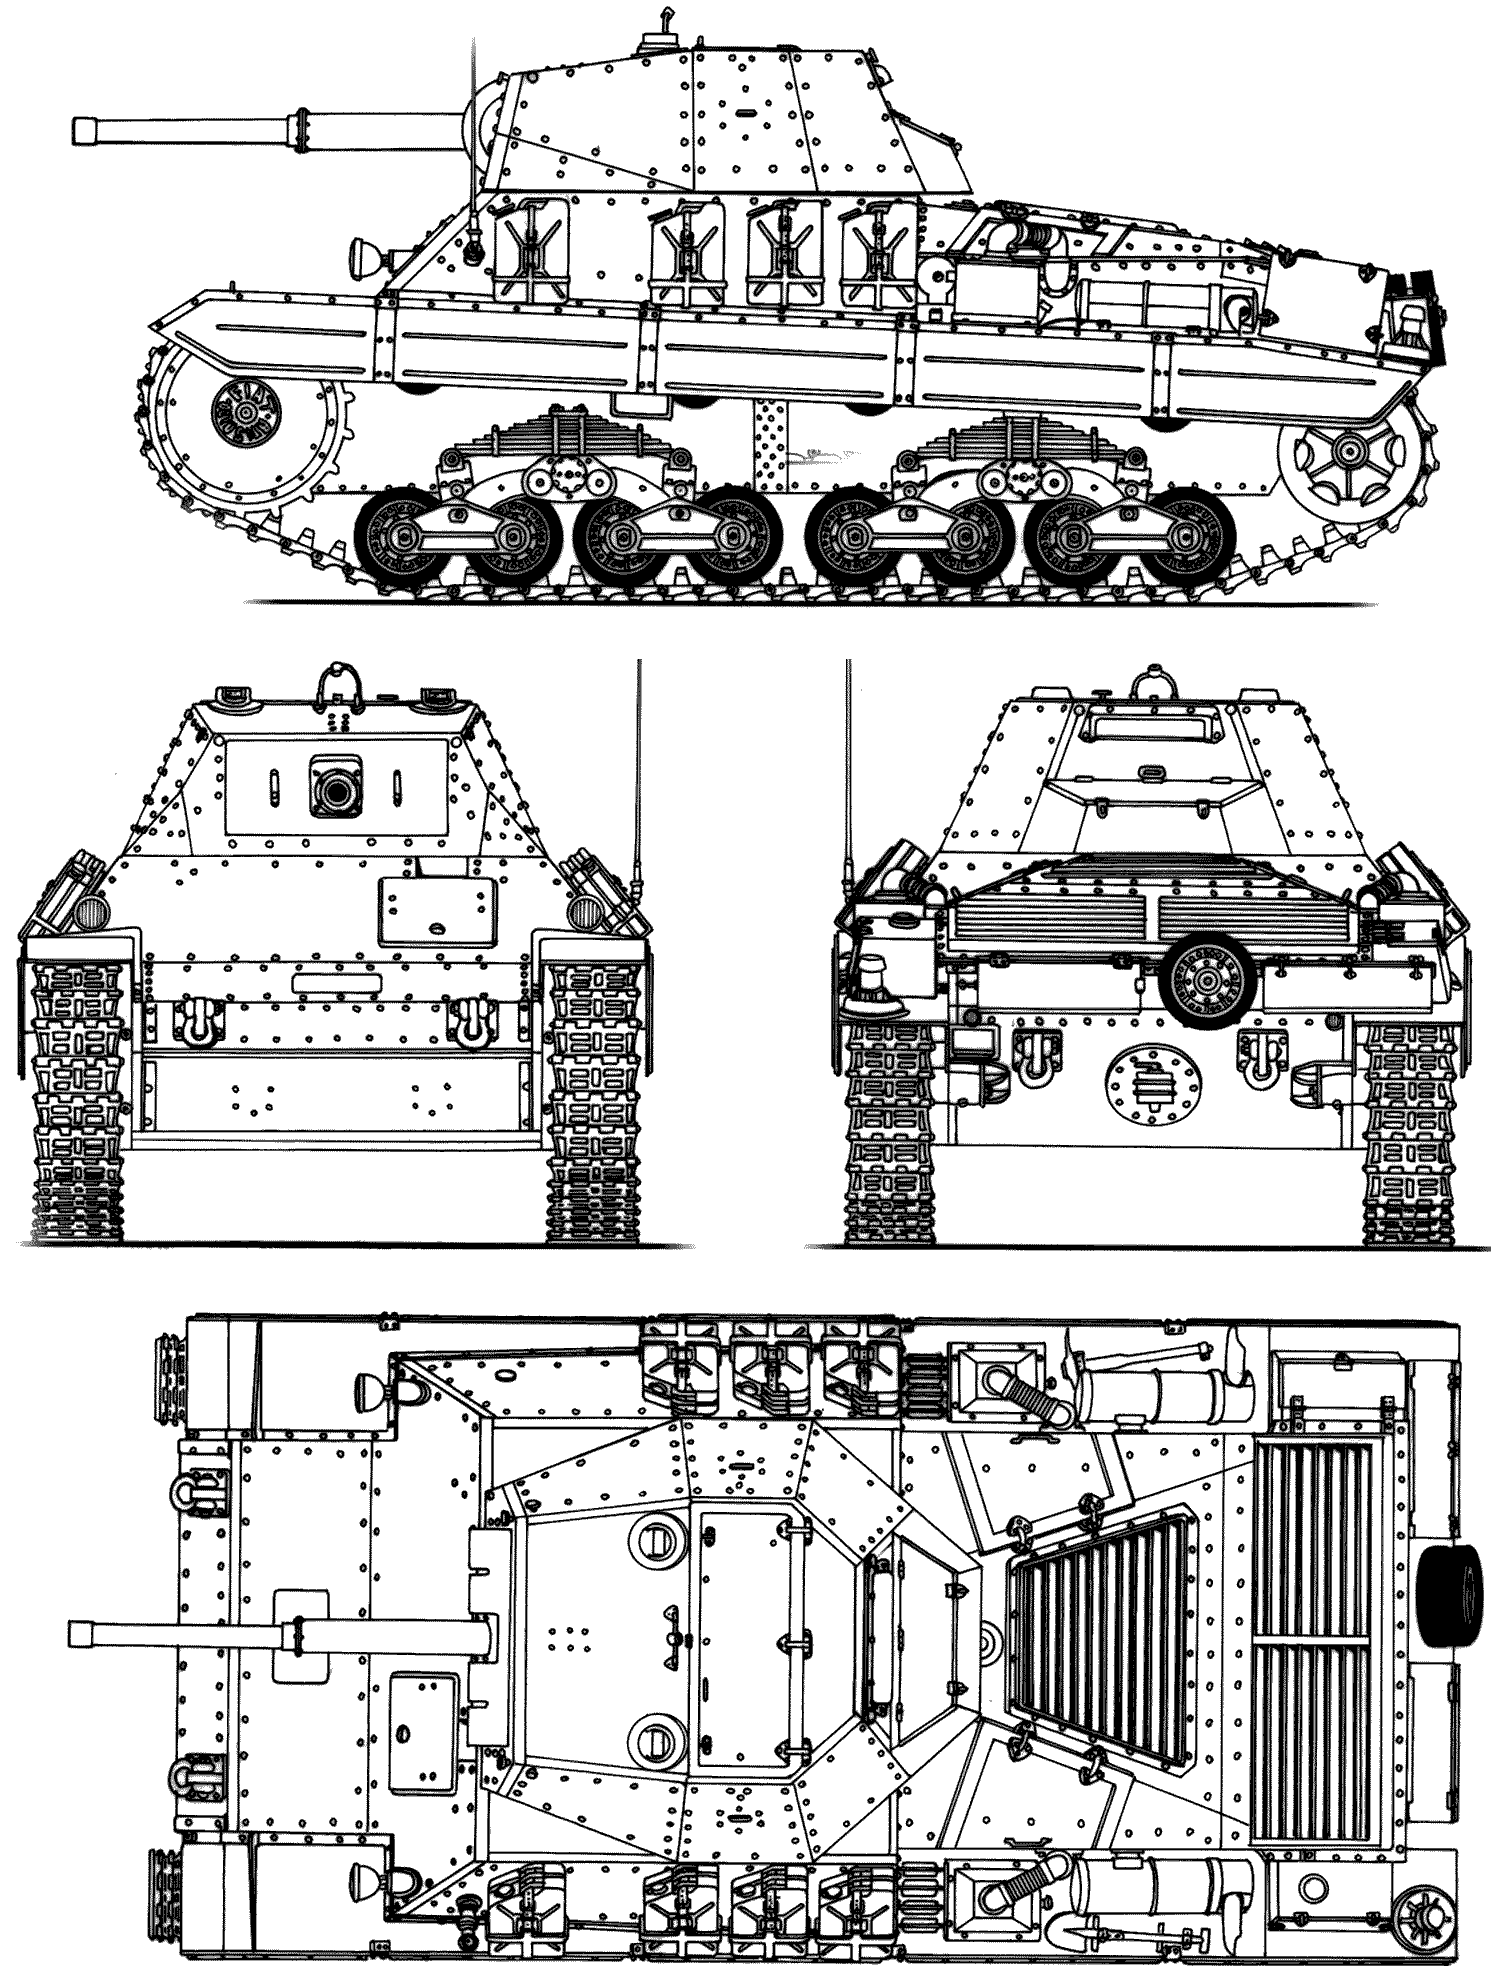 Carro Armato P 40 blueprint